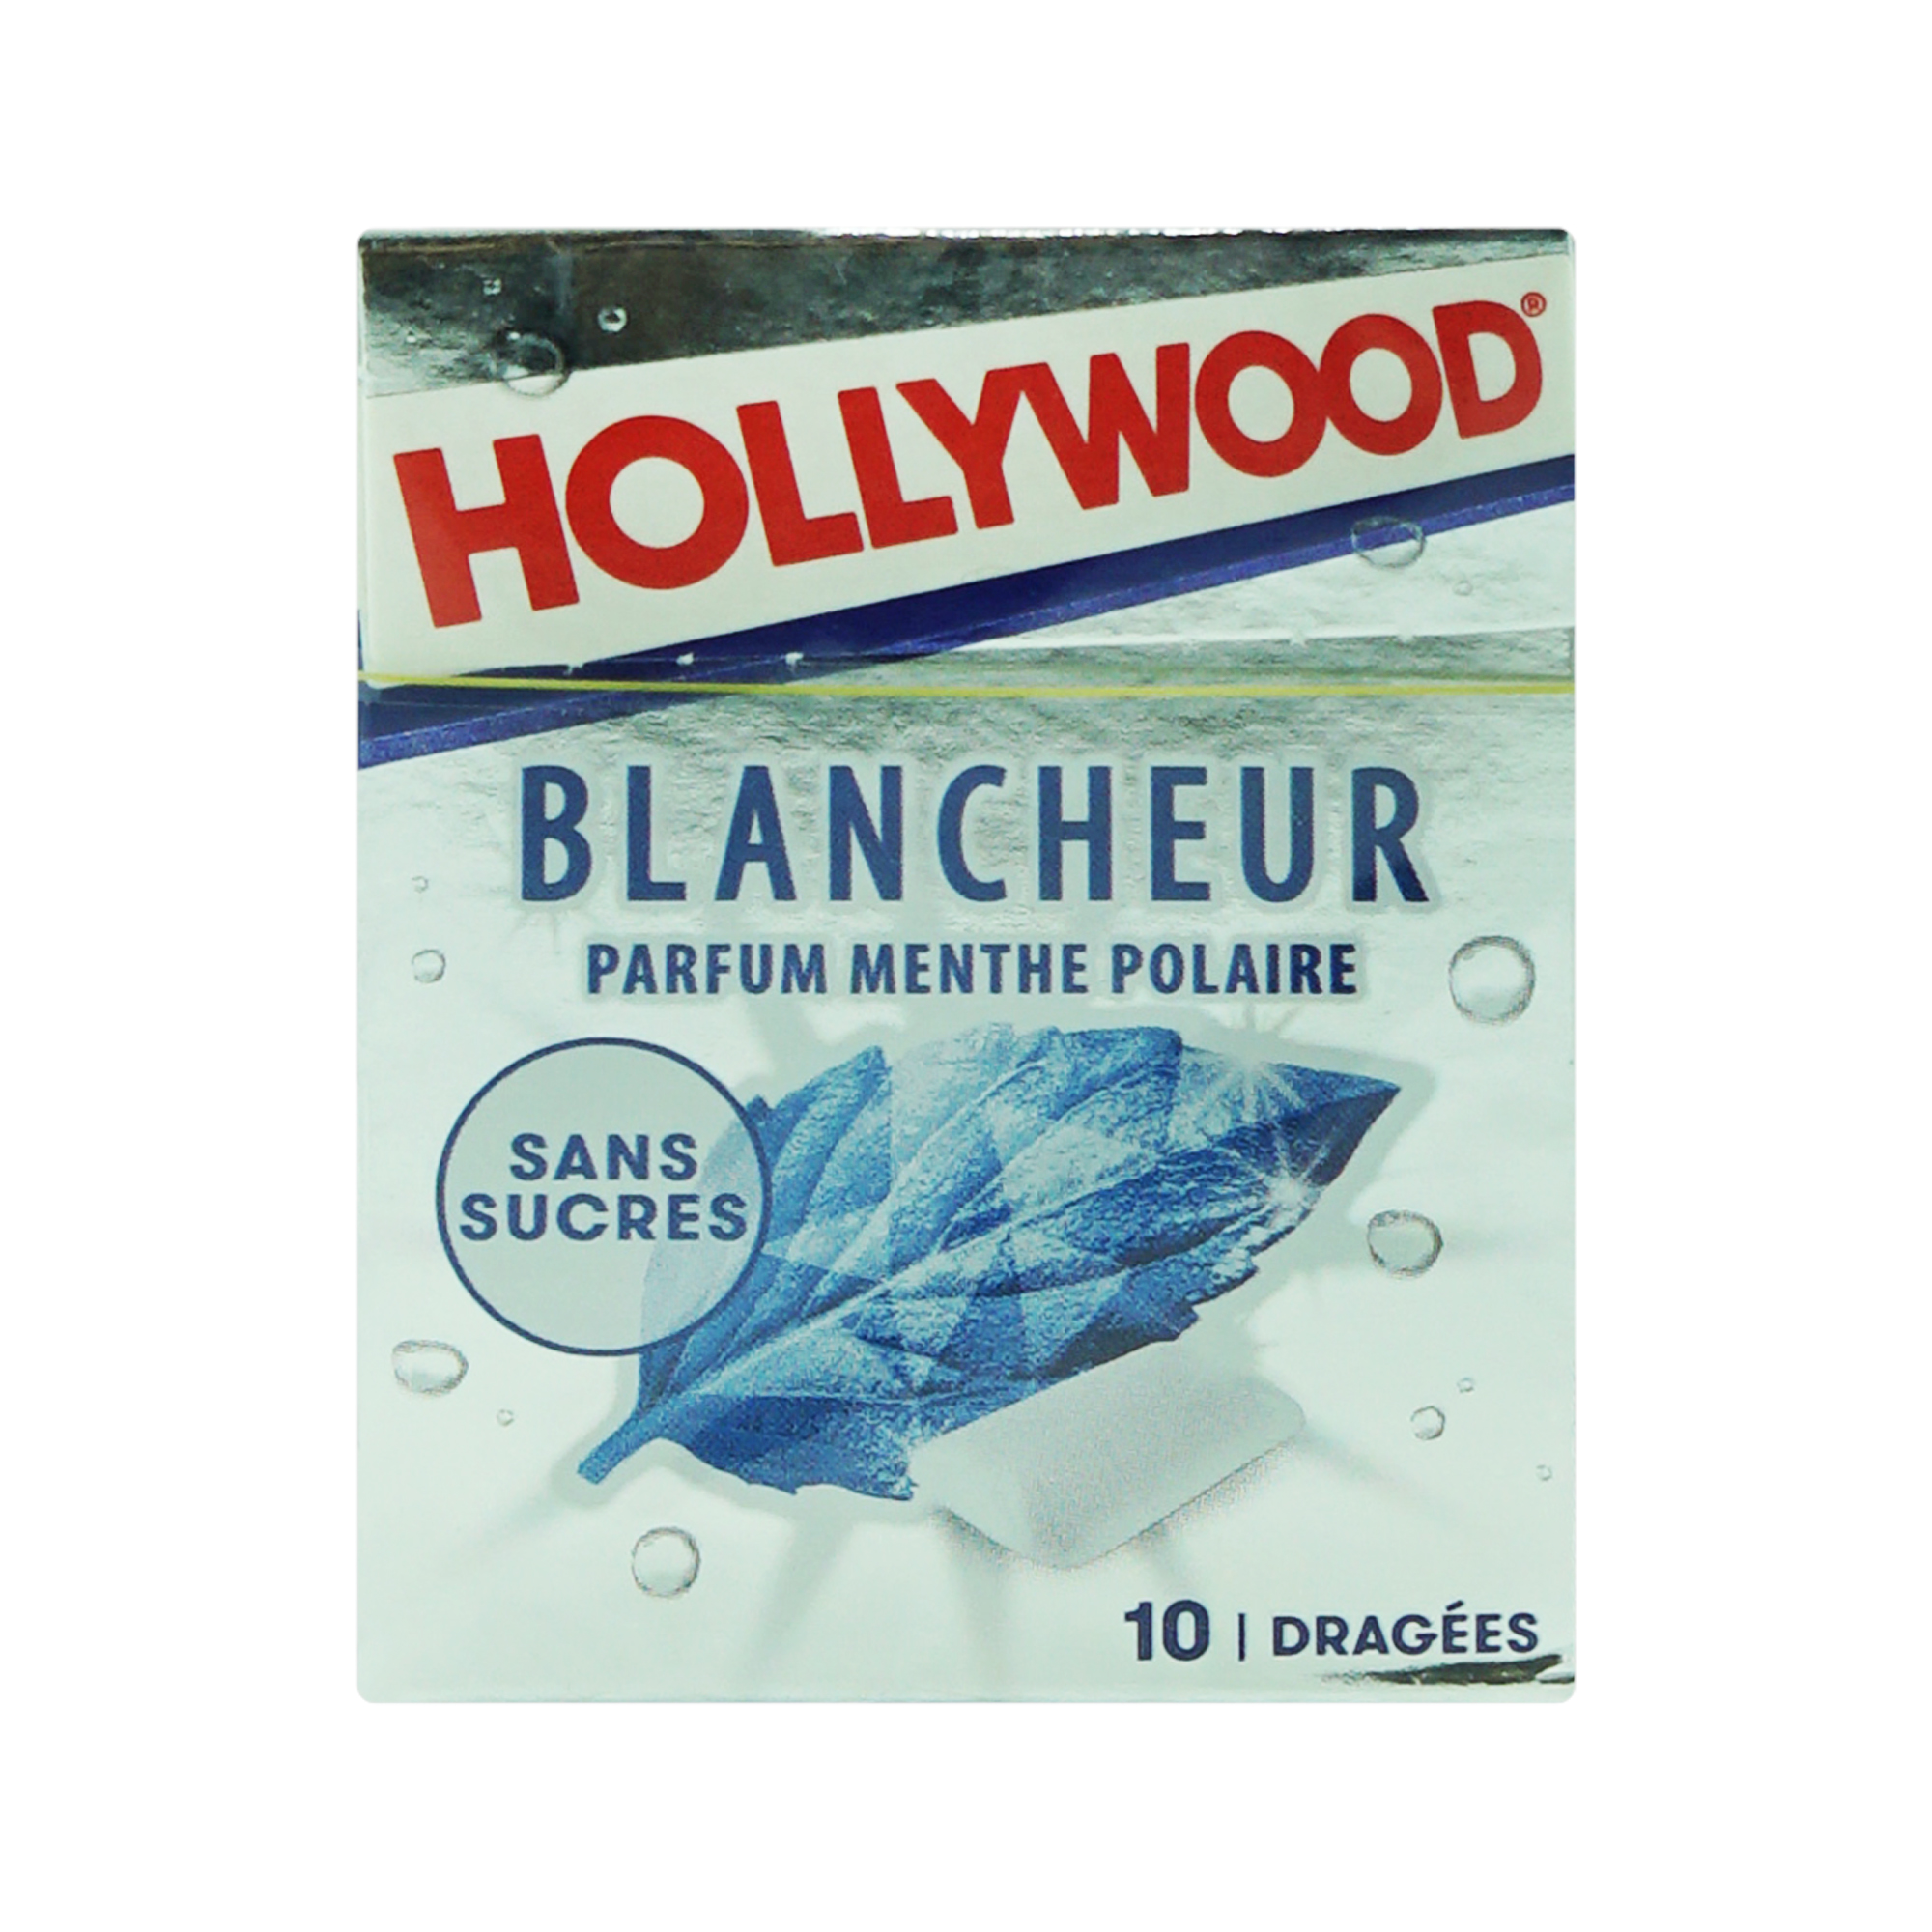 Hollywood Blancheur Menthol x20 (14g)